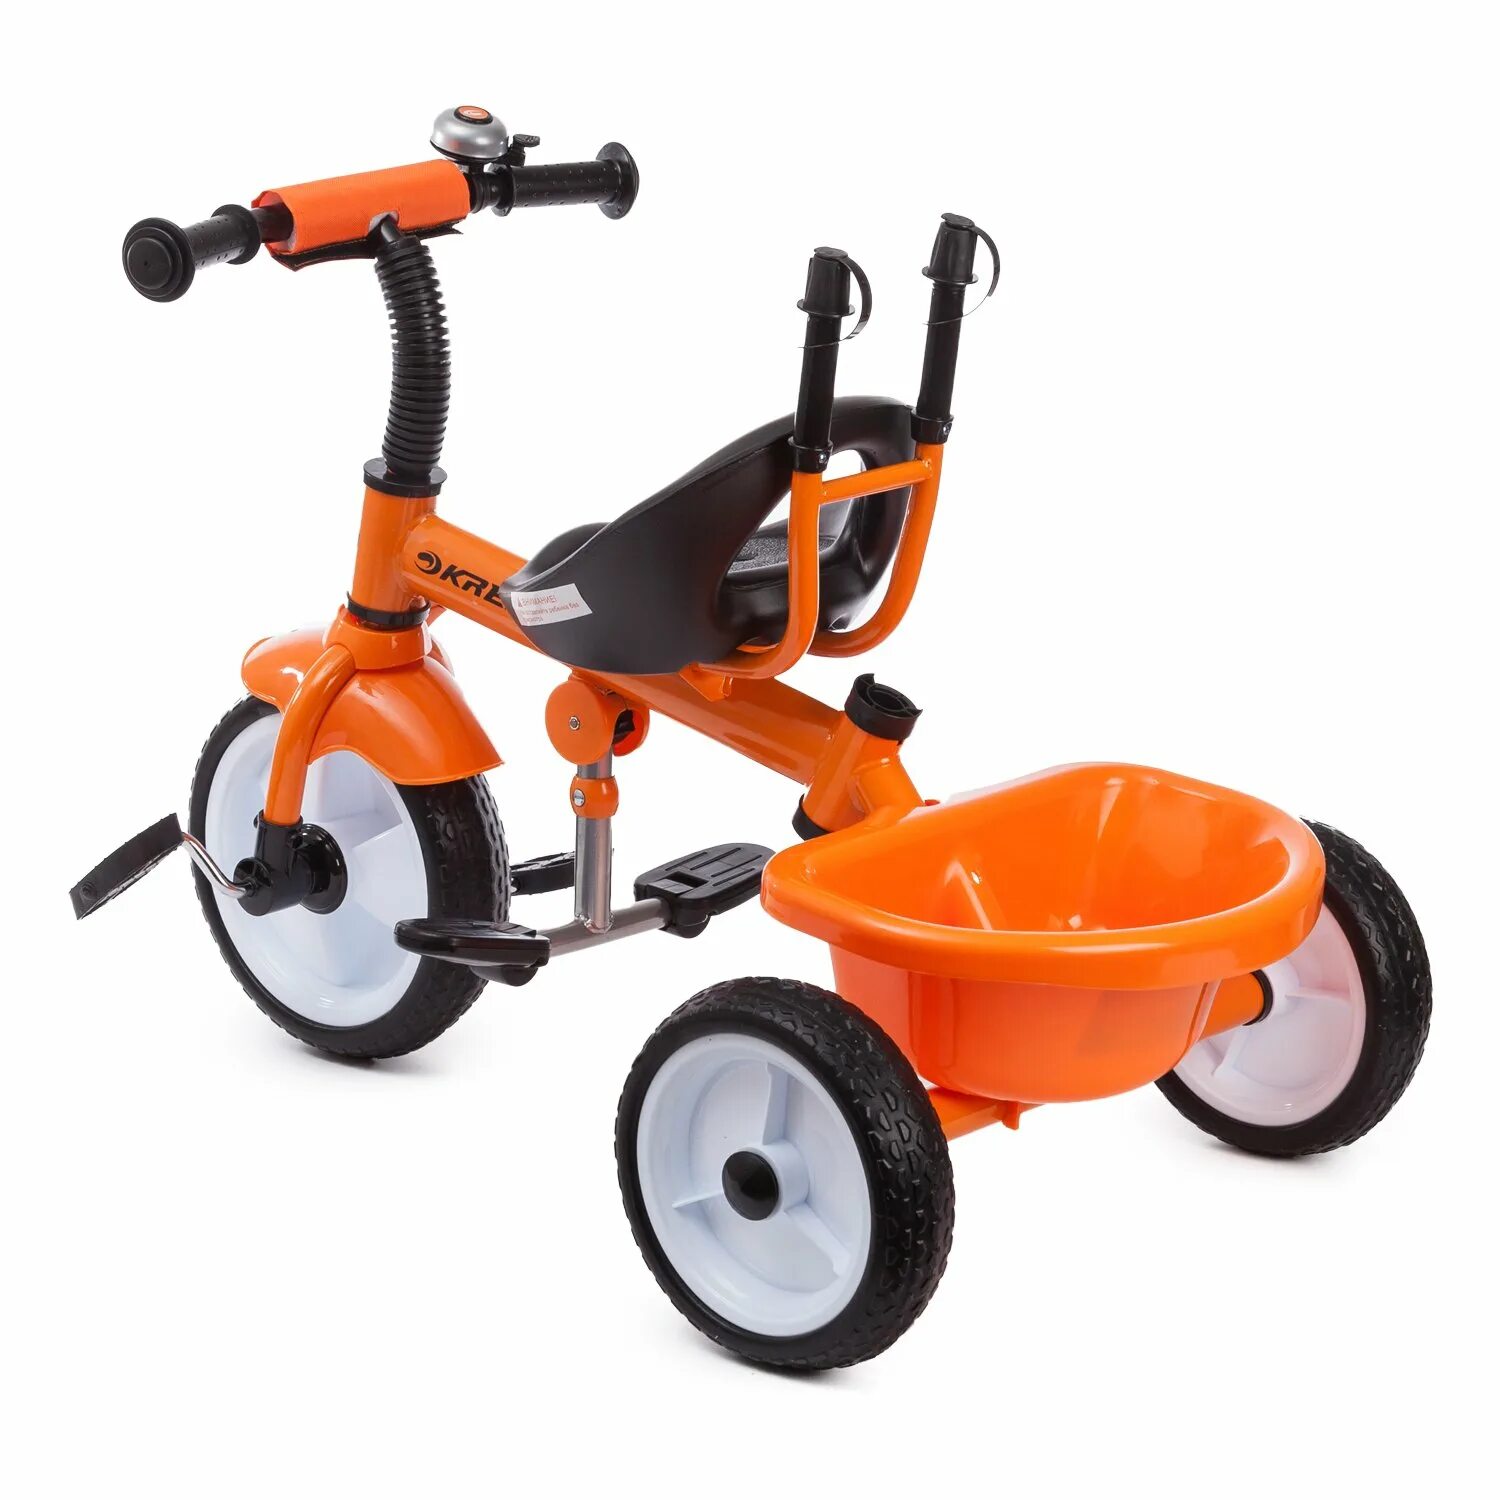 Детский велосипед Kreiss трехколесный. Велосипед Kreiss трехколесный 3. Велосипед Kreiss оранжевый. Kreiss велосипед трехколесный с ручкой